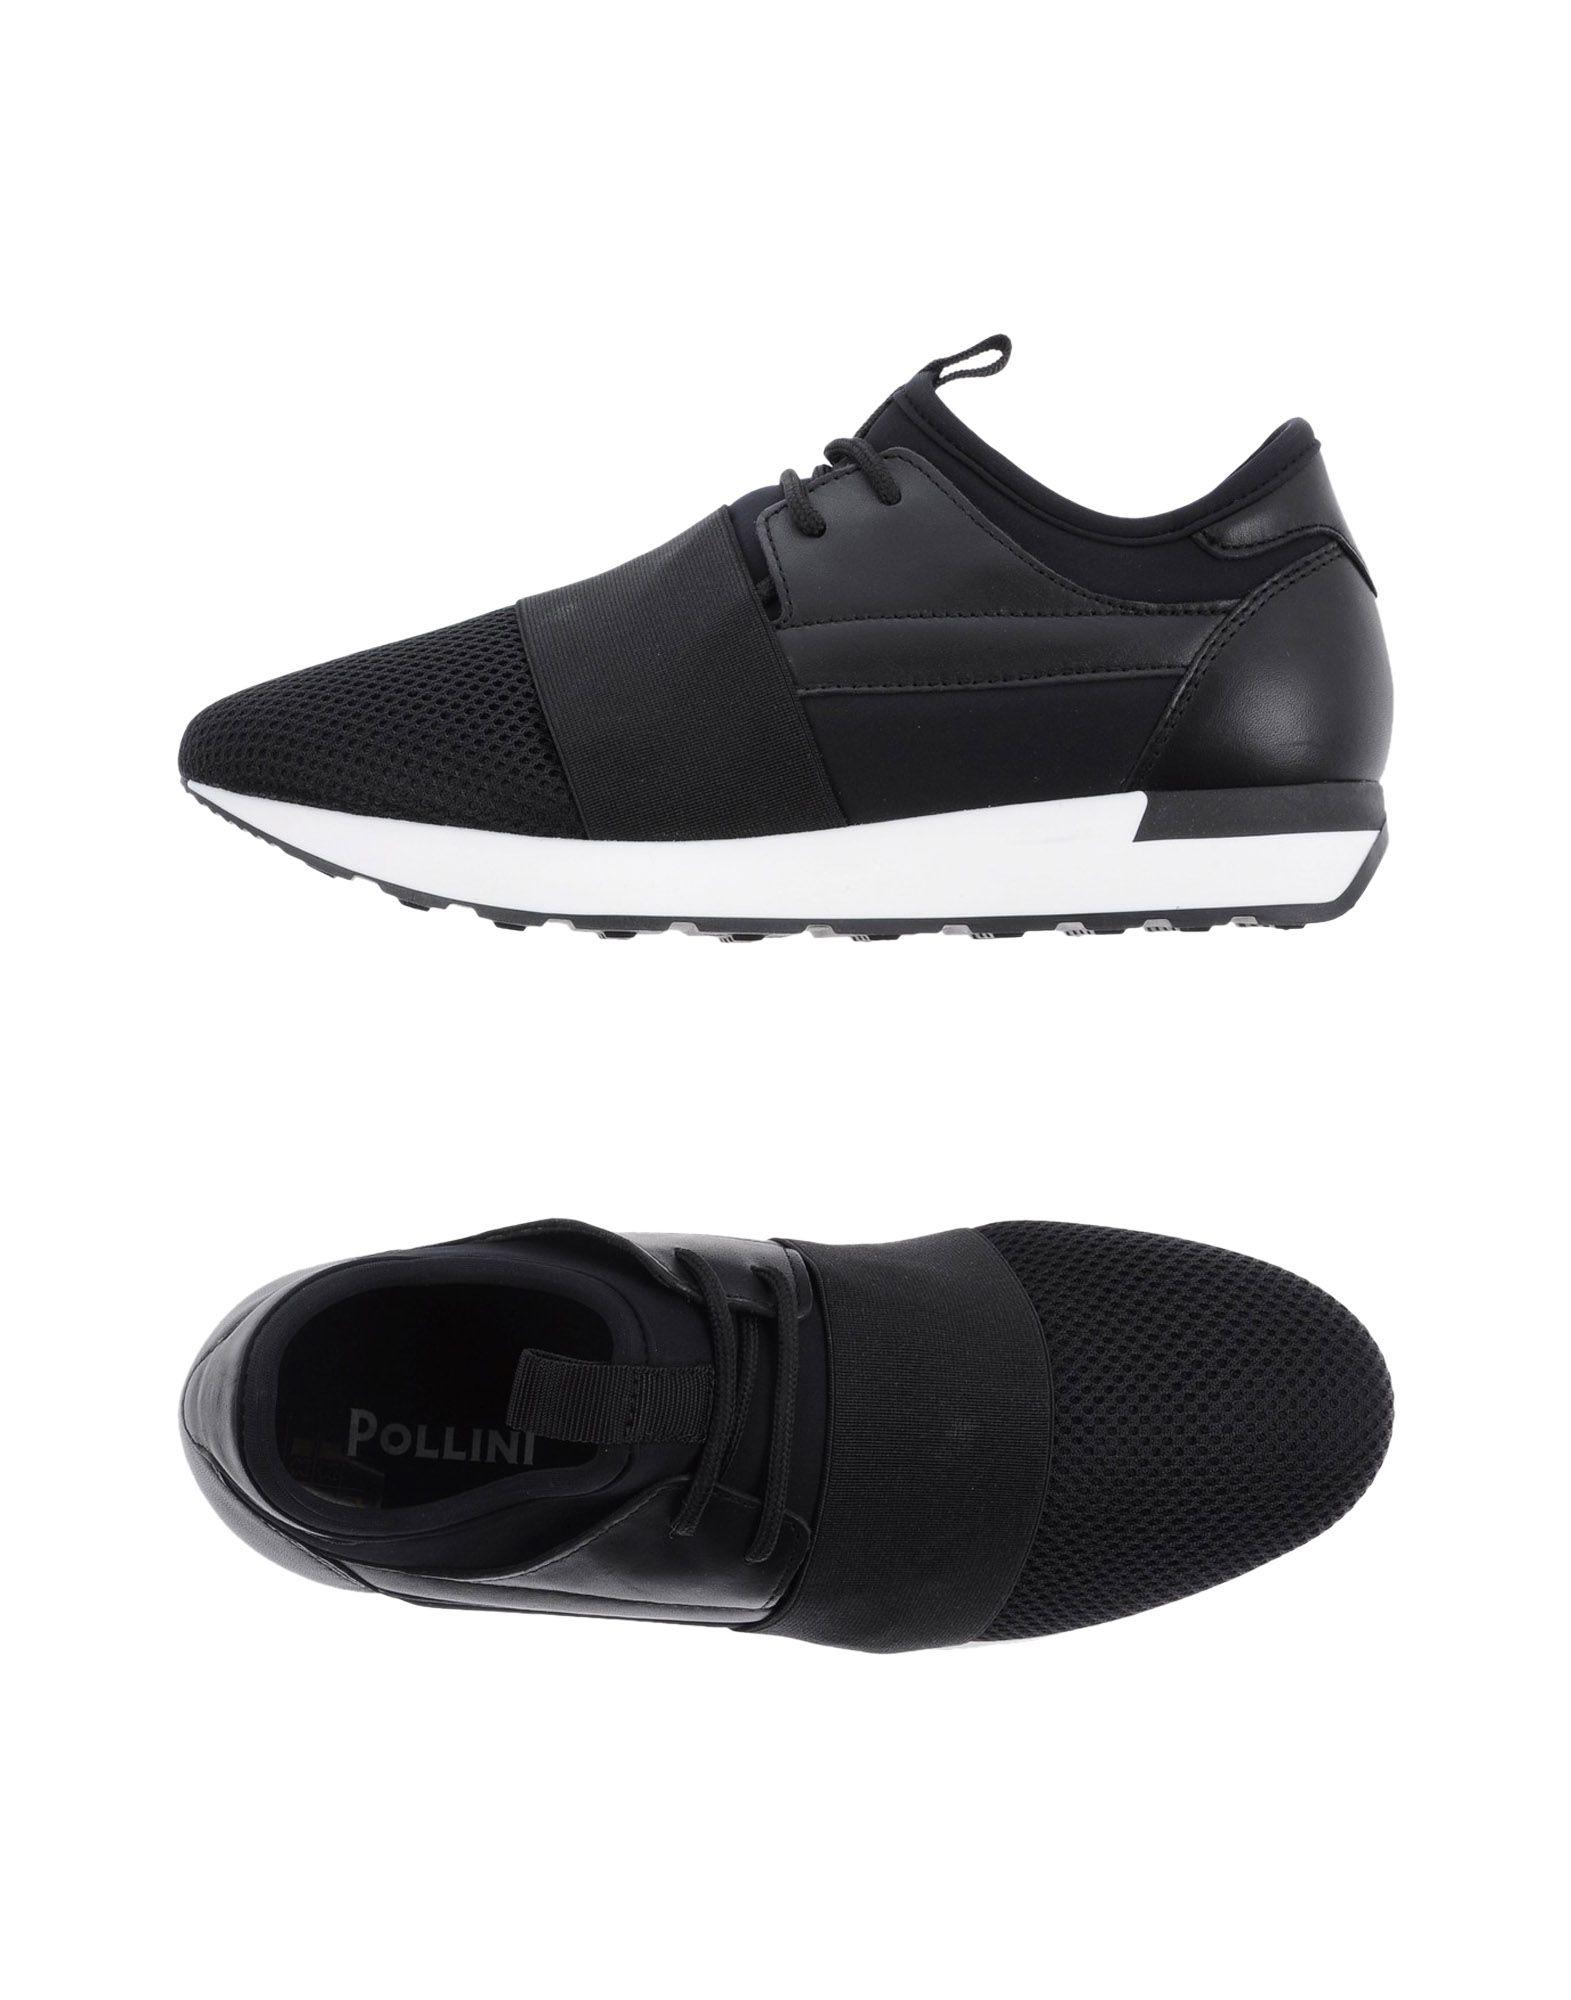 Lyst - Pollini Low-tops & Sneakers in Black for Men